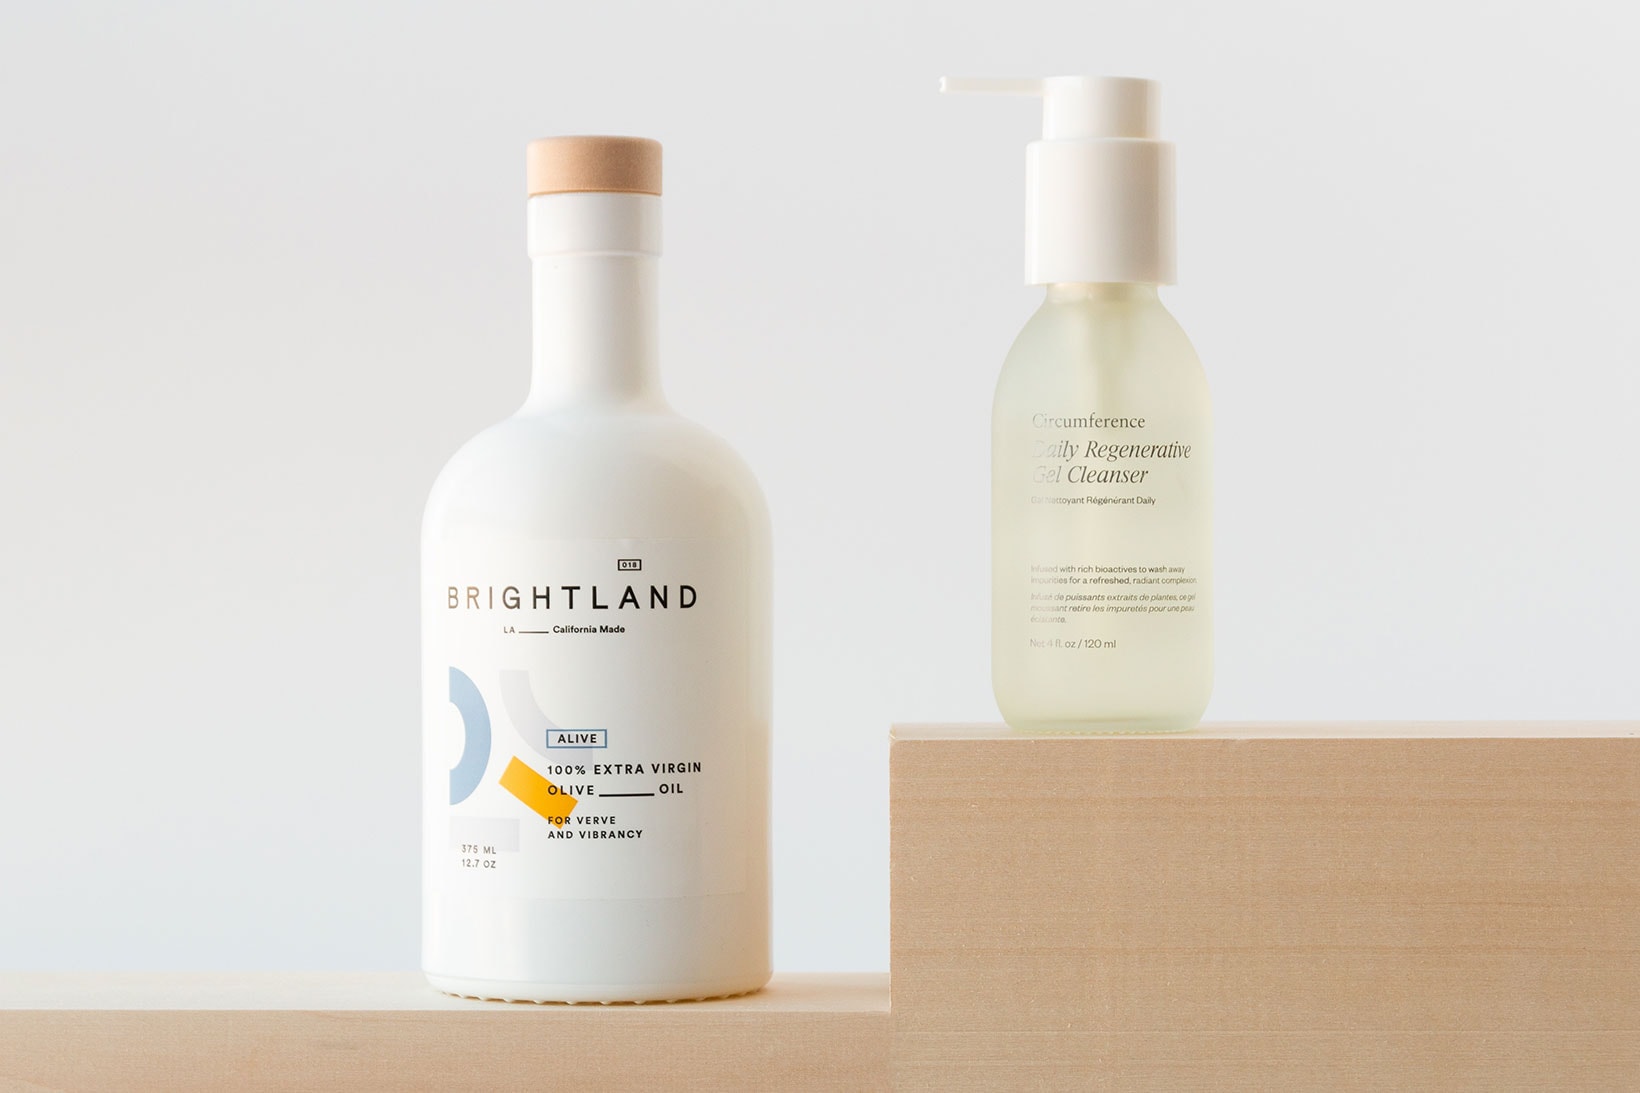 circumference brightland daily regenerative gel cleanser collaboration olive oil bottles packaging